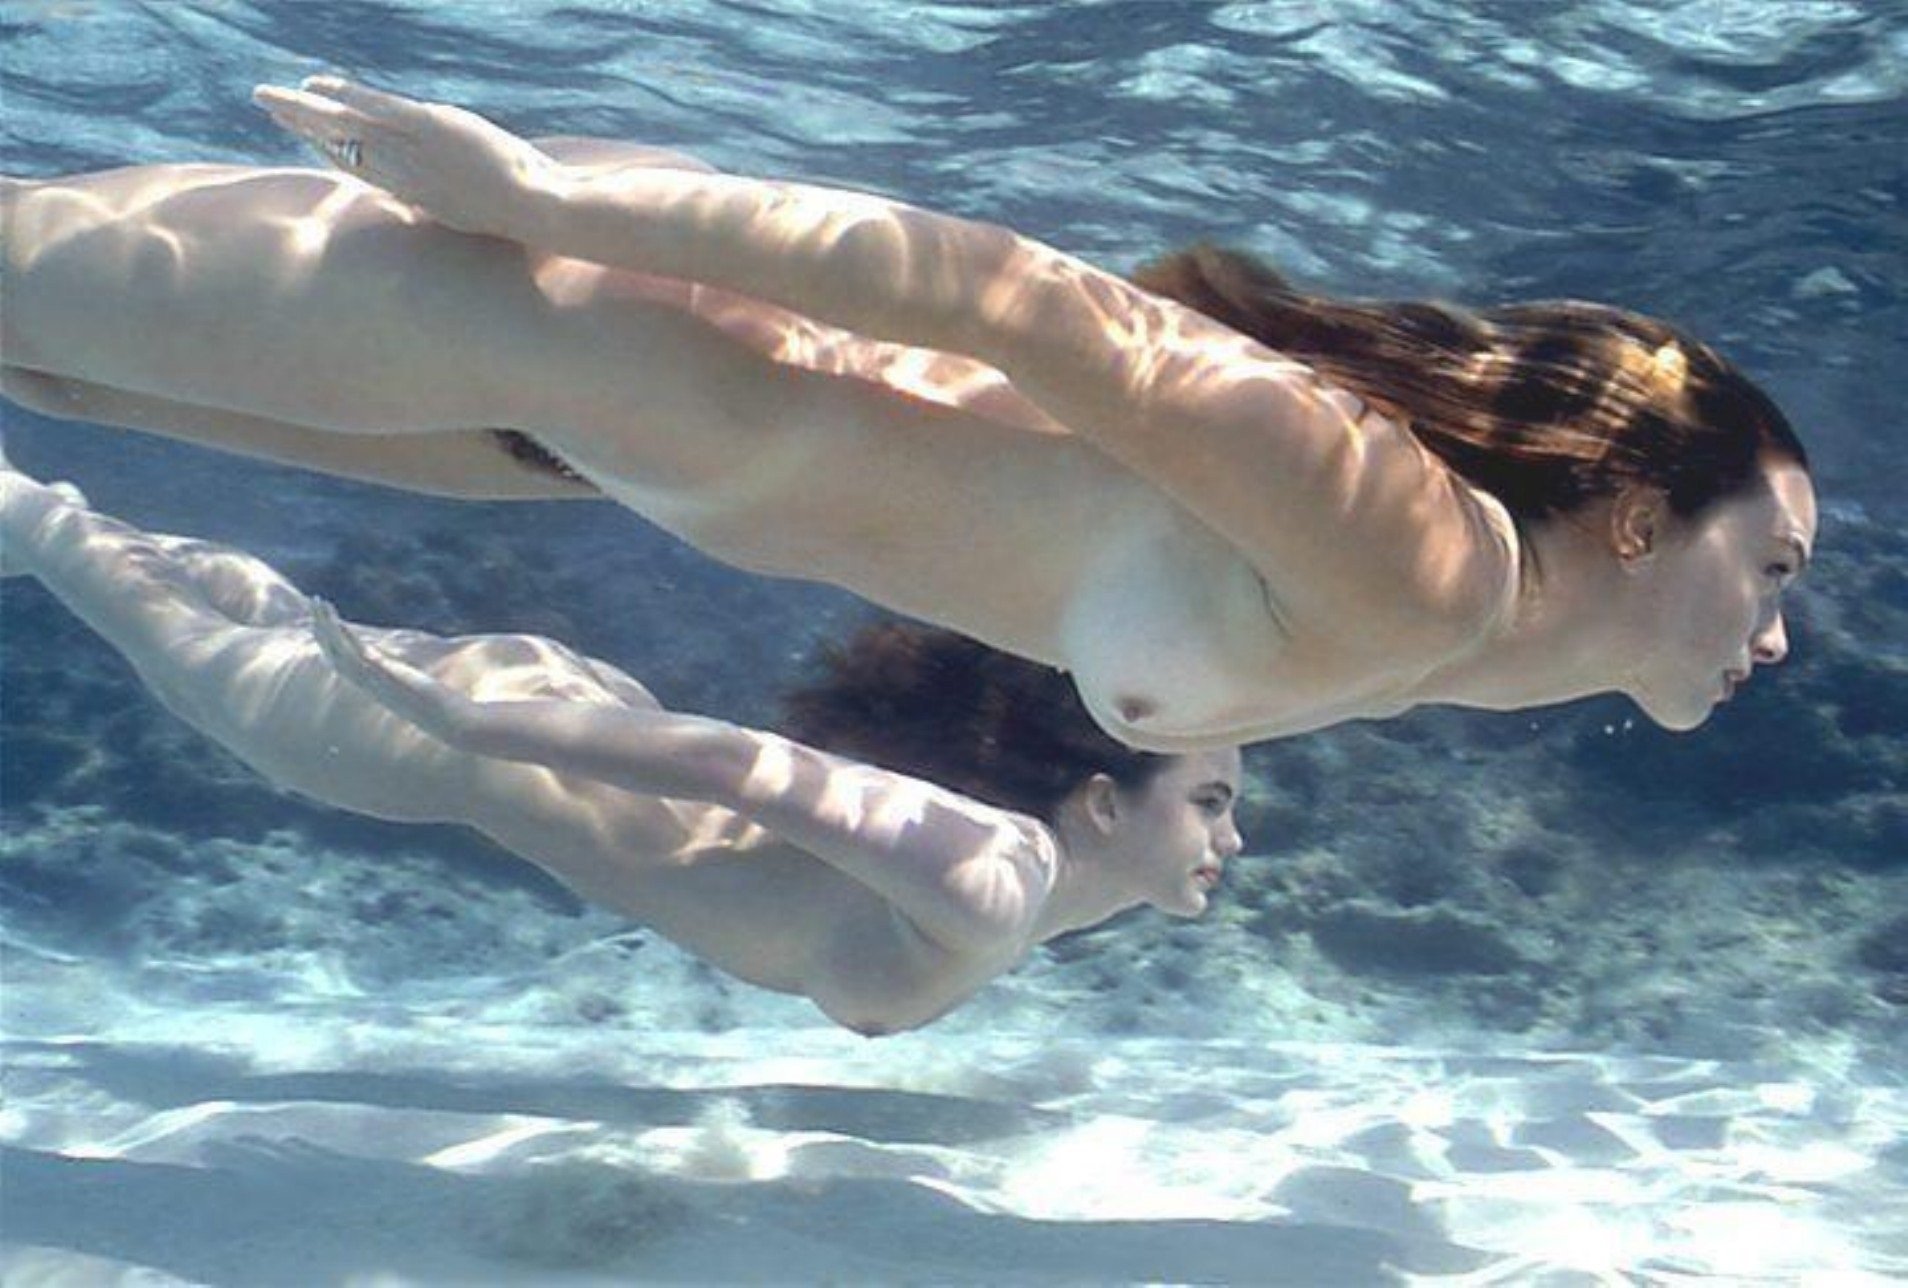 brendan corey add girls swimming nude underwater photo